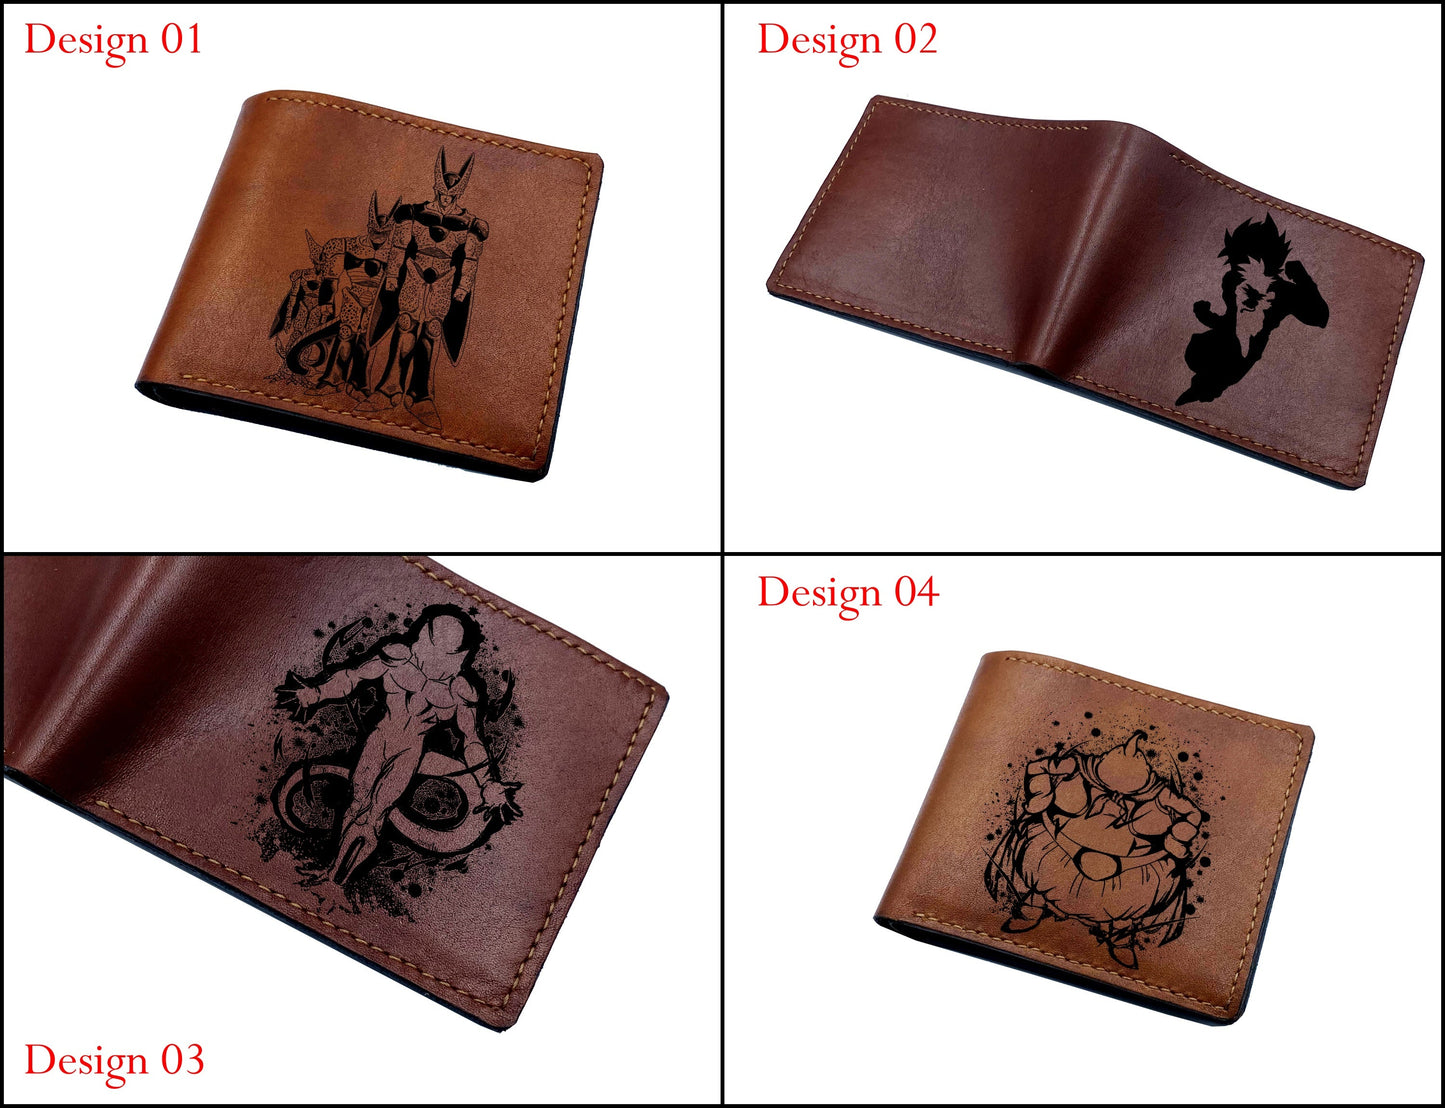 Mayan Corner - Majin Buu drawing wallet, dragon ball villain characters gift, gift for dragon ball fan, japan anime leather gift ideas, gift for boy